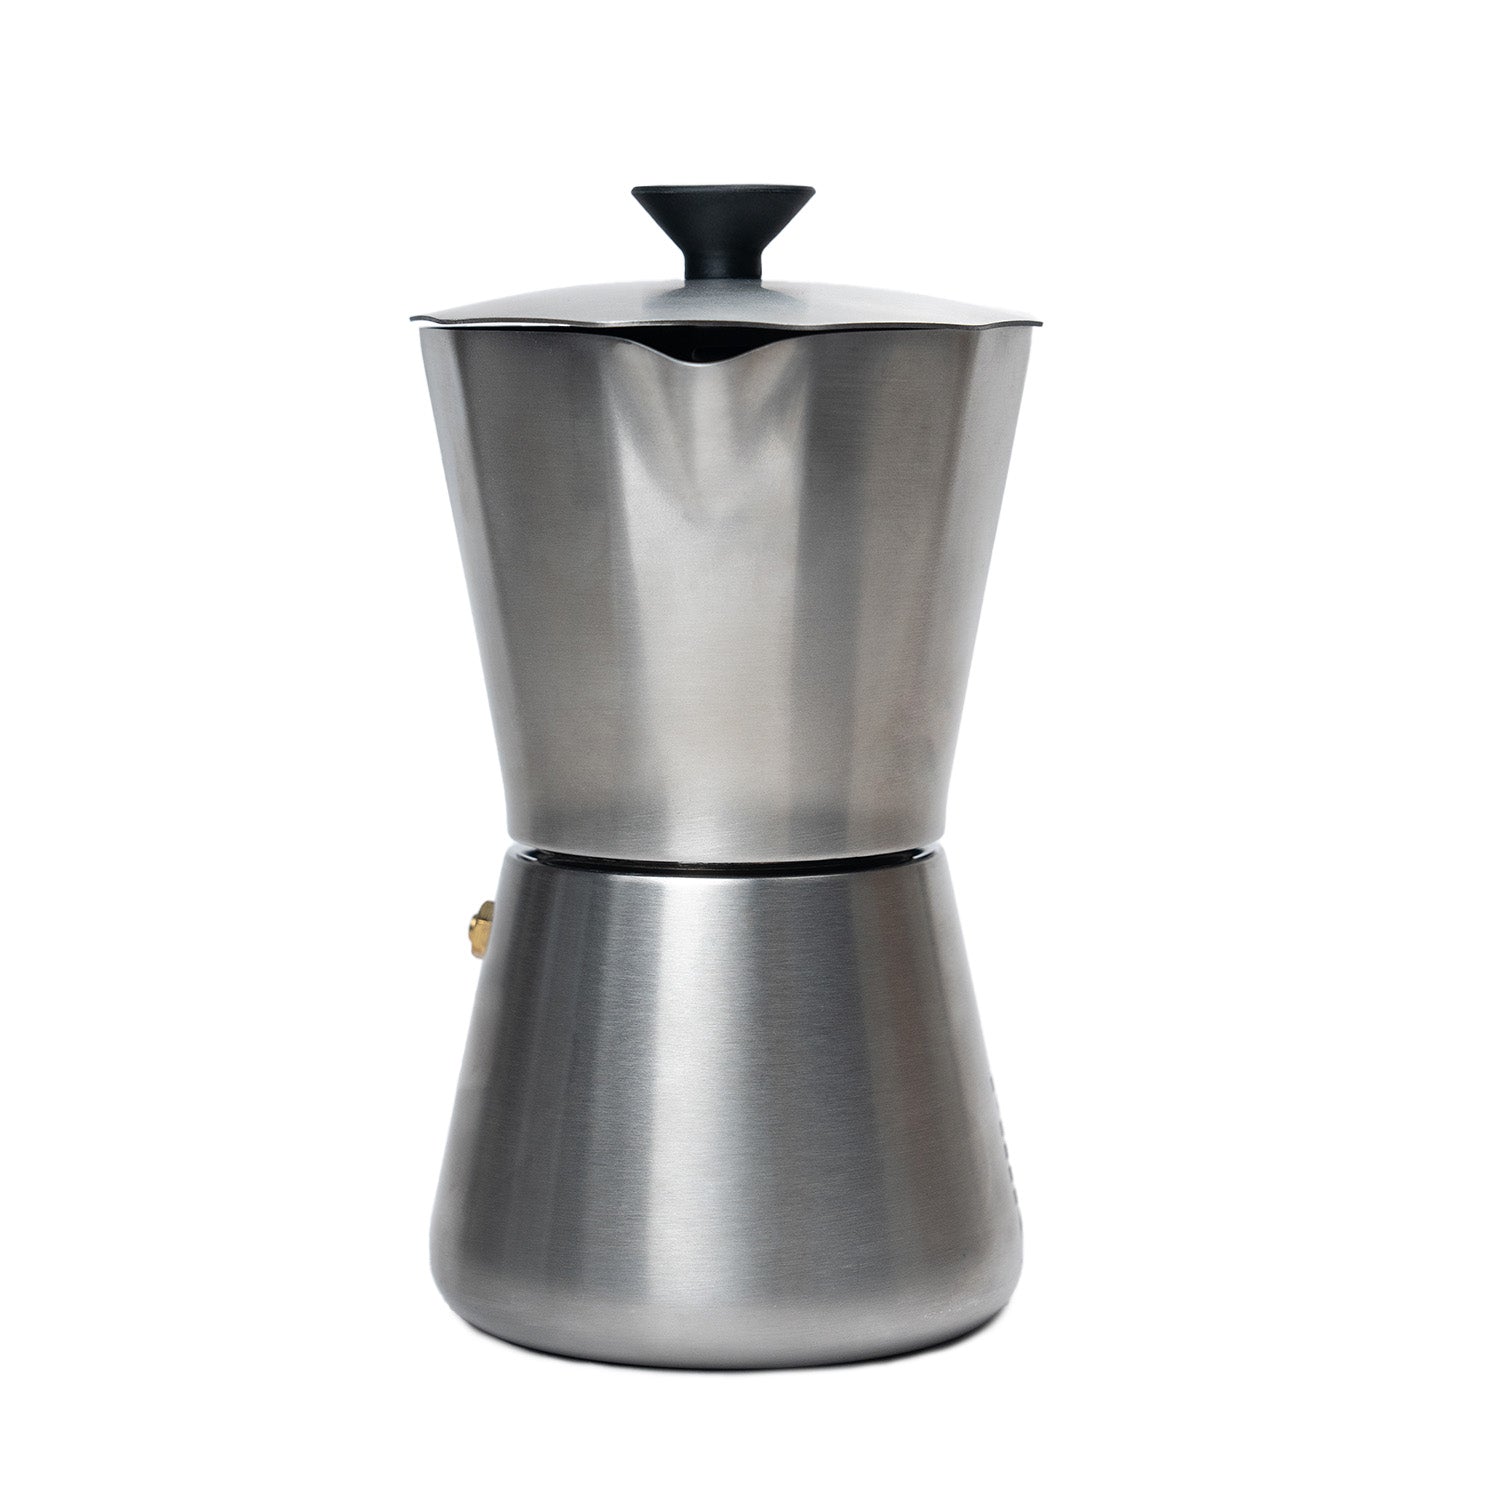 Stainless Steel Stovetop Moka Pot Camping Coffee Pot Italian Espresso Maker